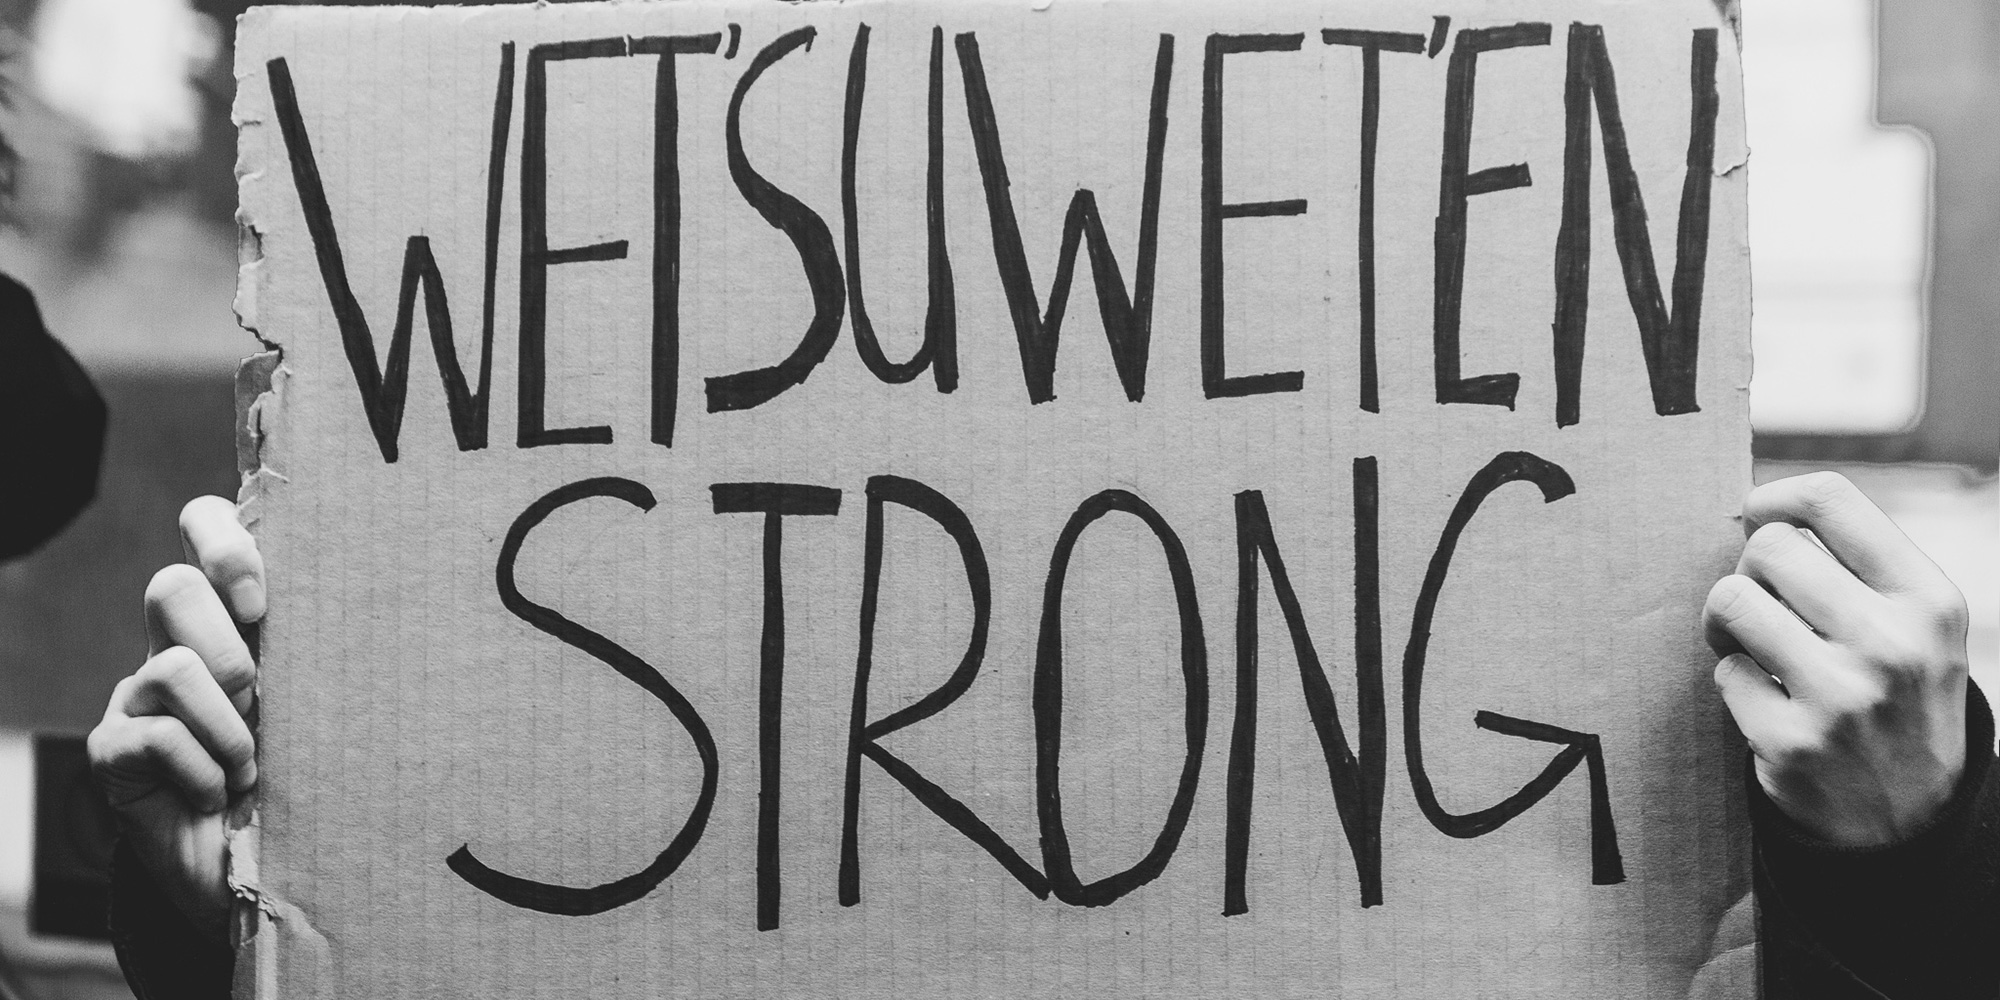 Sign from Wet'suwet'en protests. Photo: Flickr, Jason Hargove